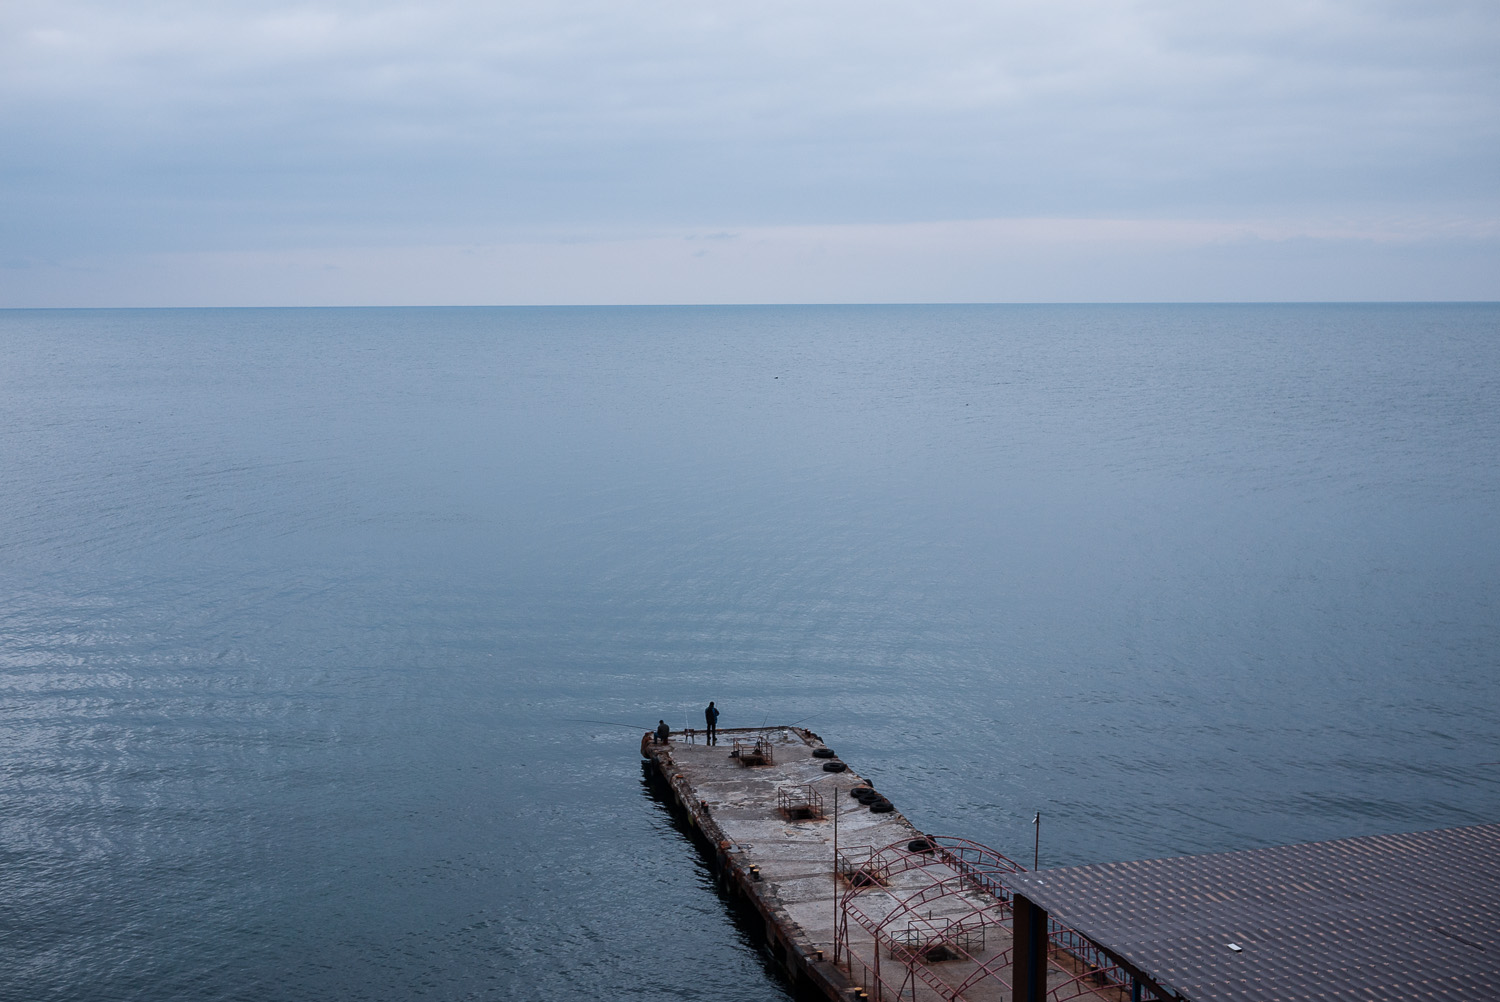  Men fishing in the Black Sea near Yalta, Crimea. 